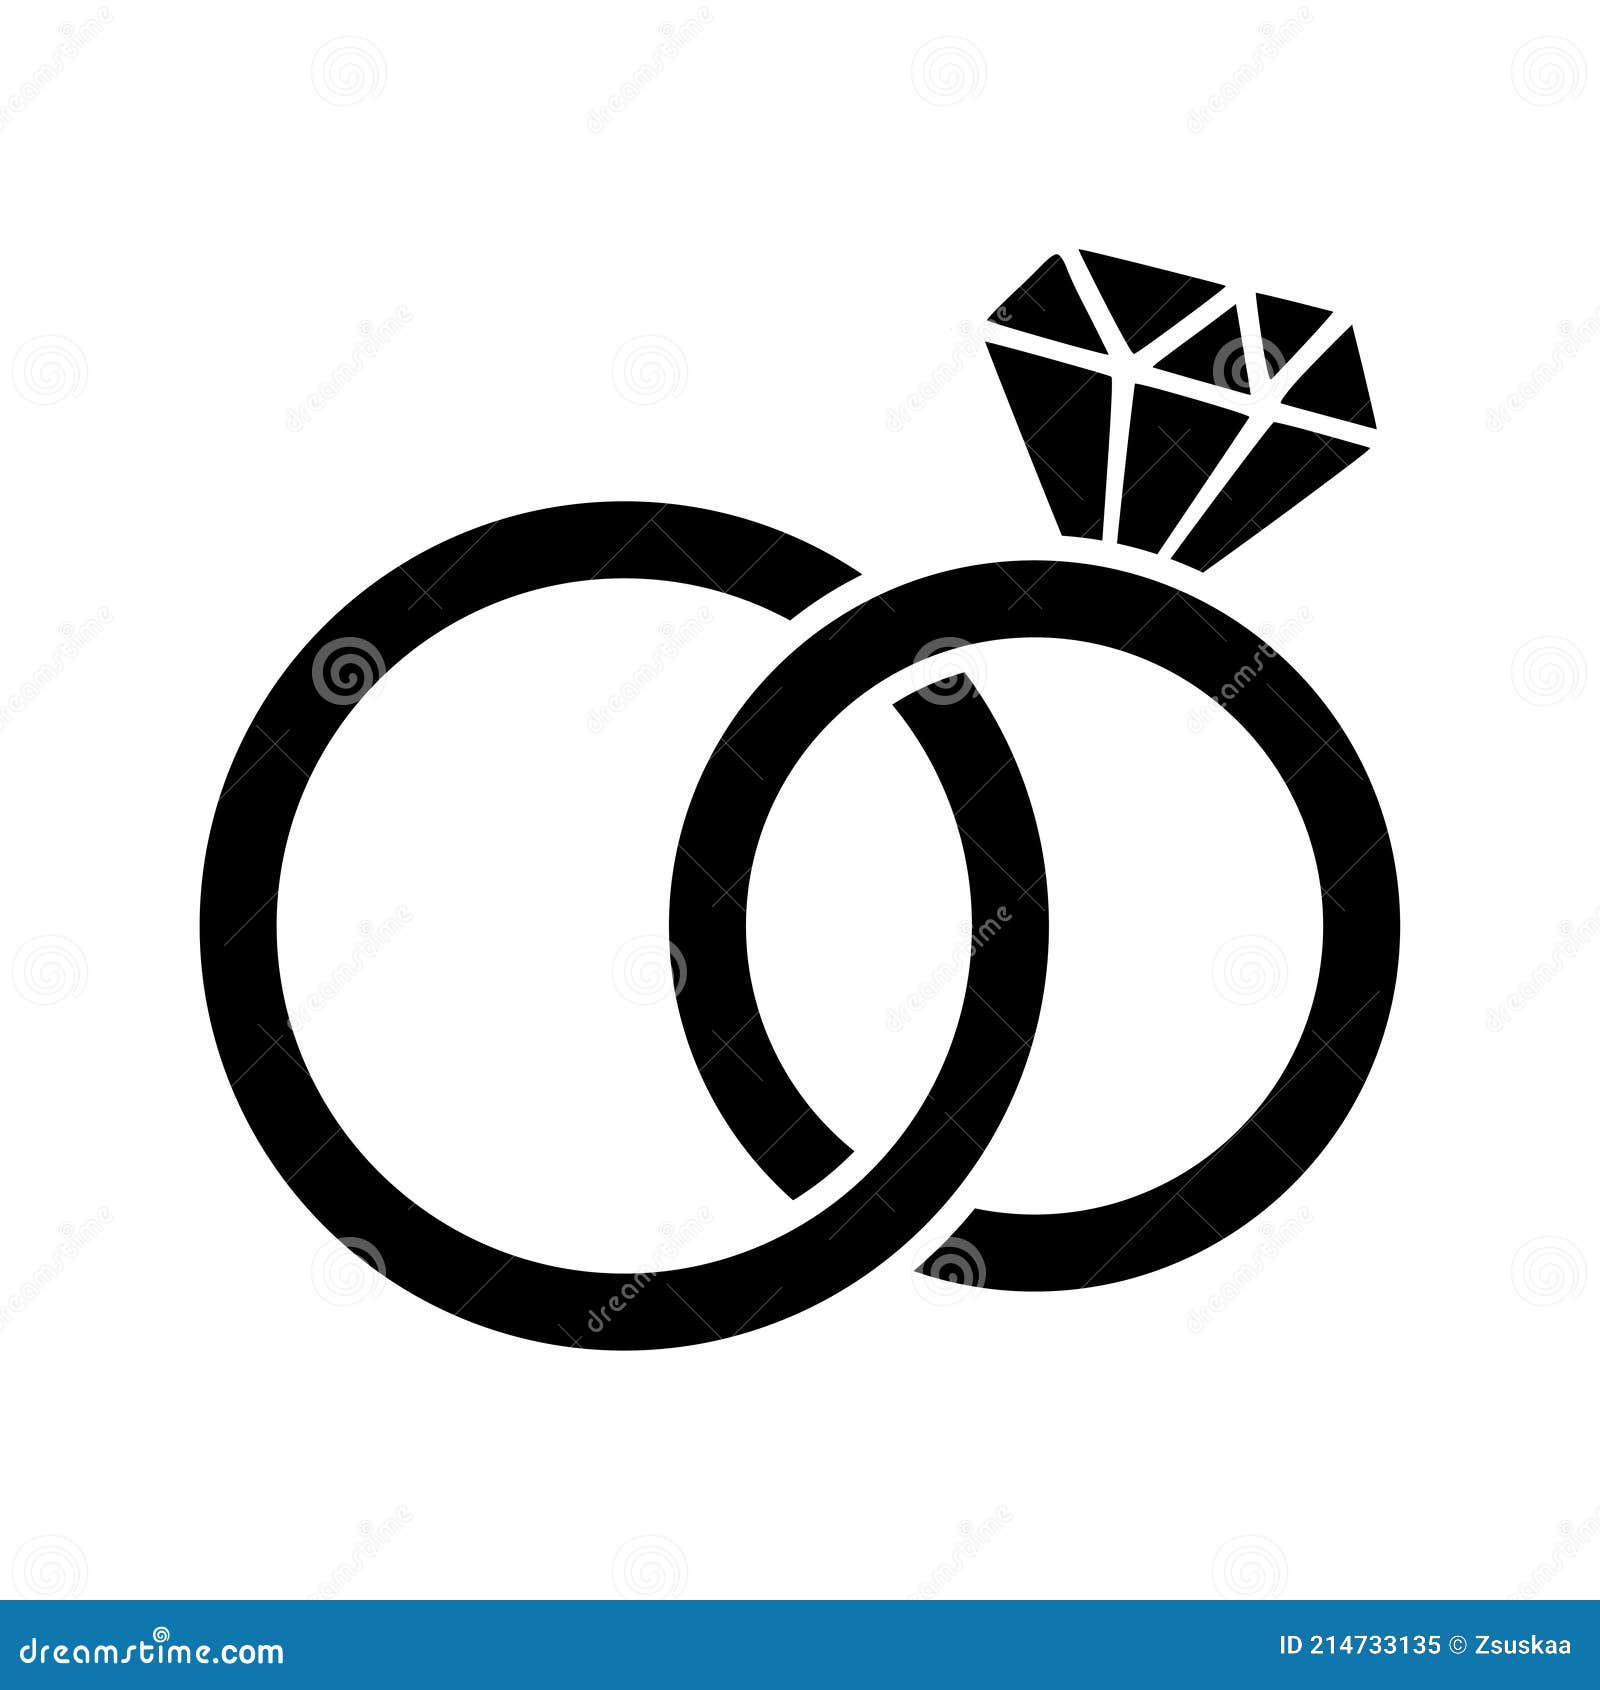 Wedding Engagement Ring Pair - Black Diamond Rings for Greeting Cards ...